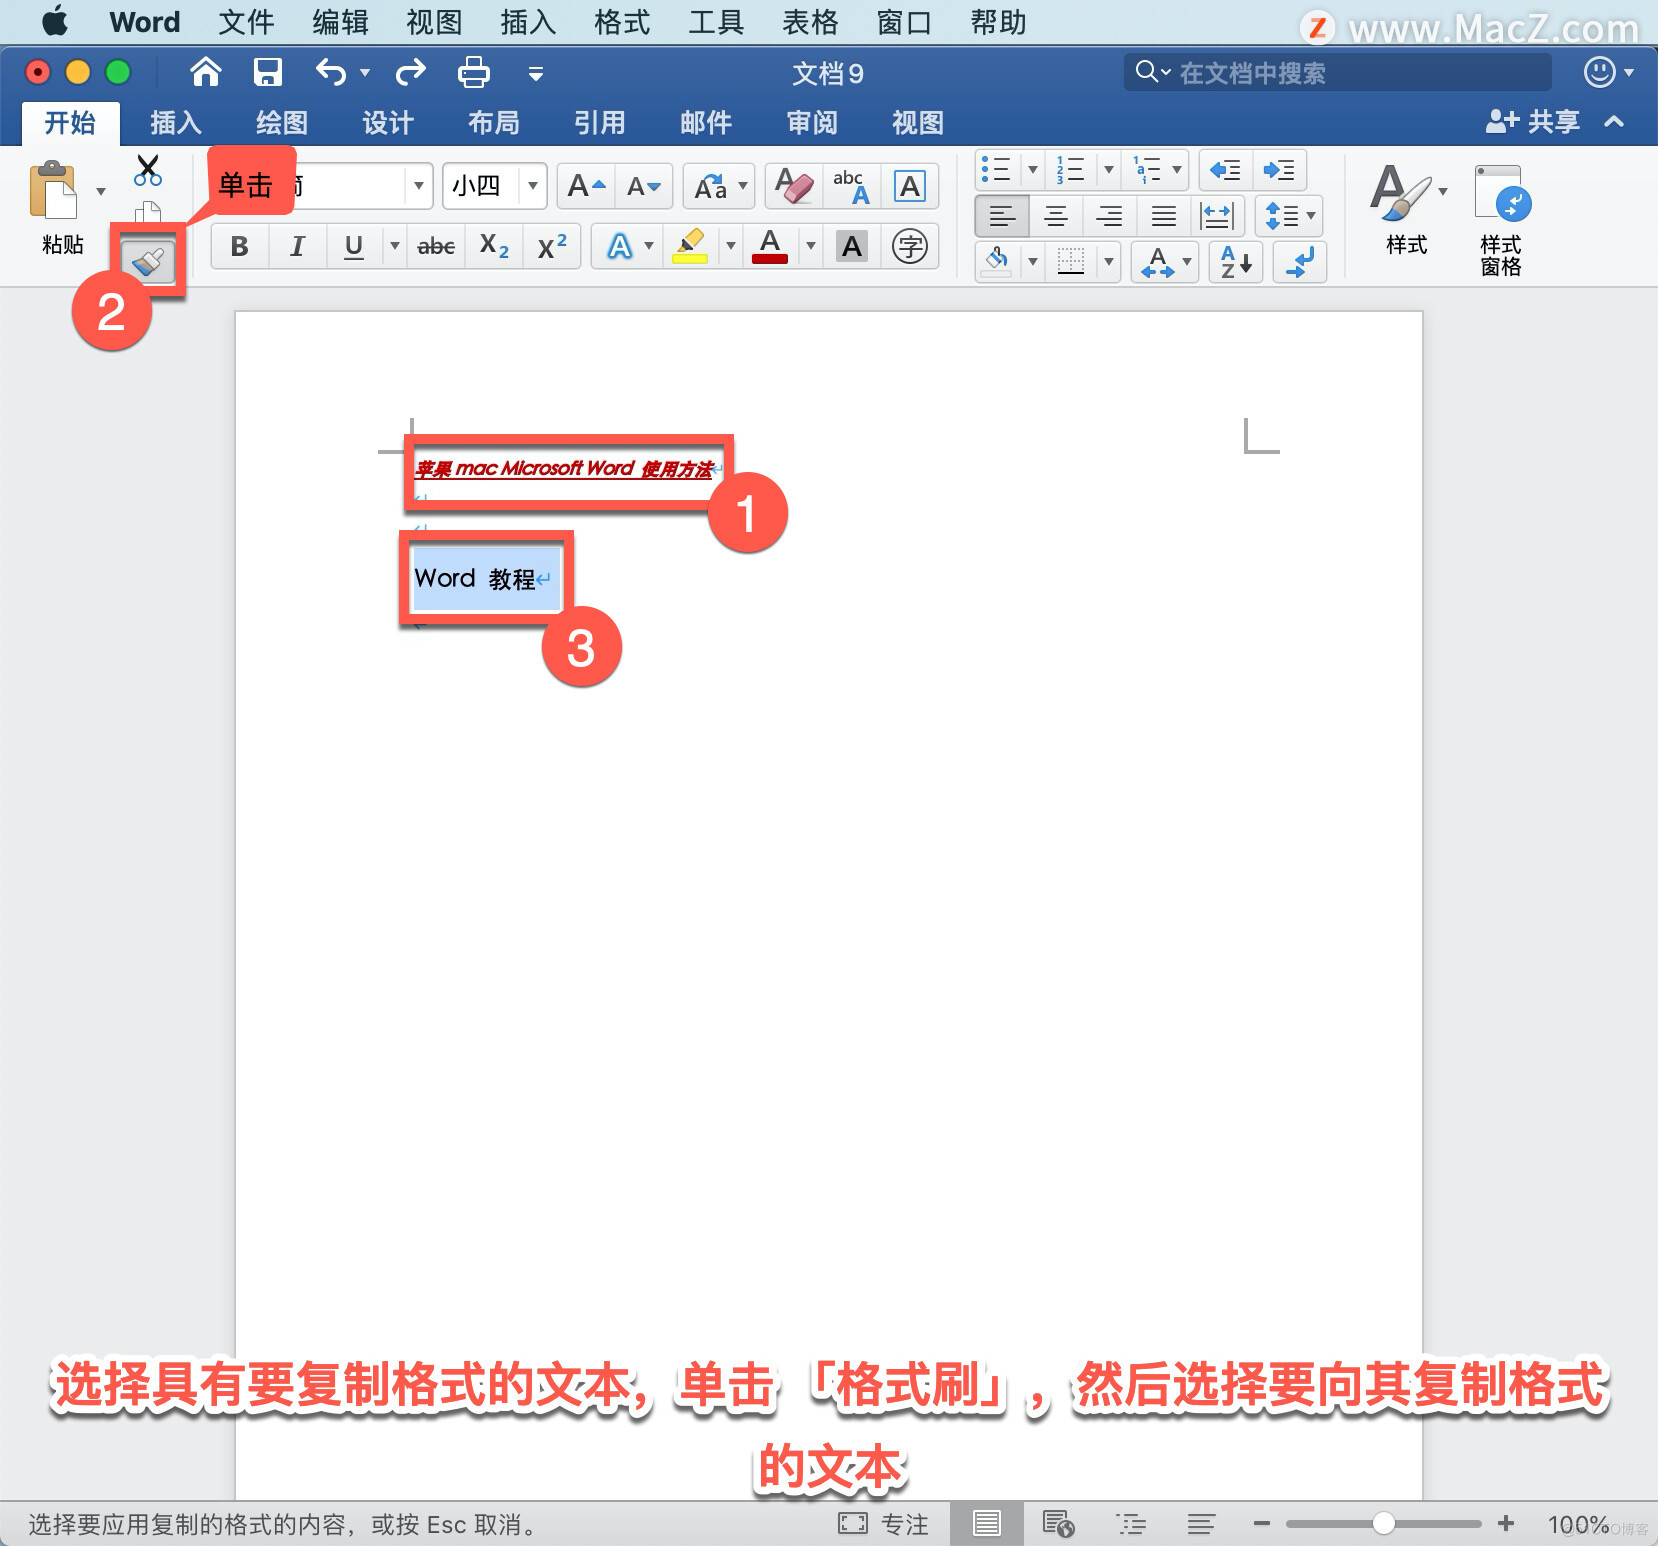 Microsoft Word教程「1」，如何在 Word 中创建文档、添加和编辑文本？_下划线_09